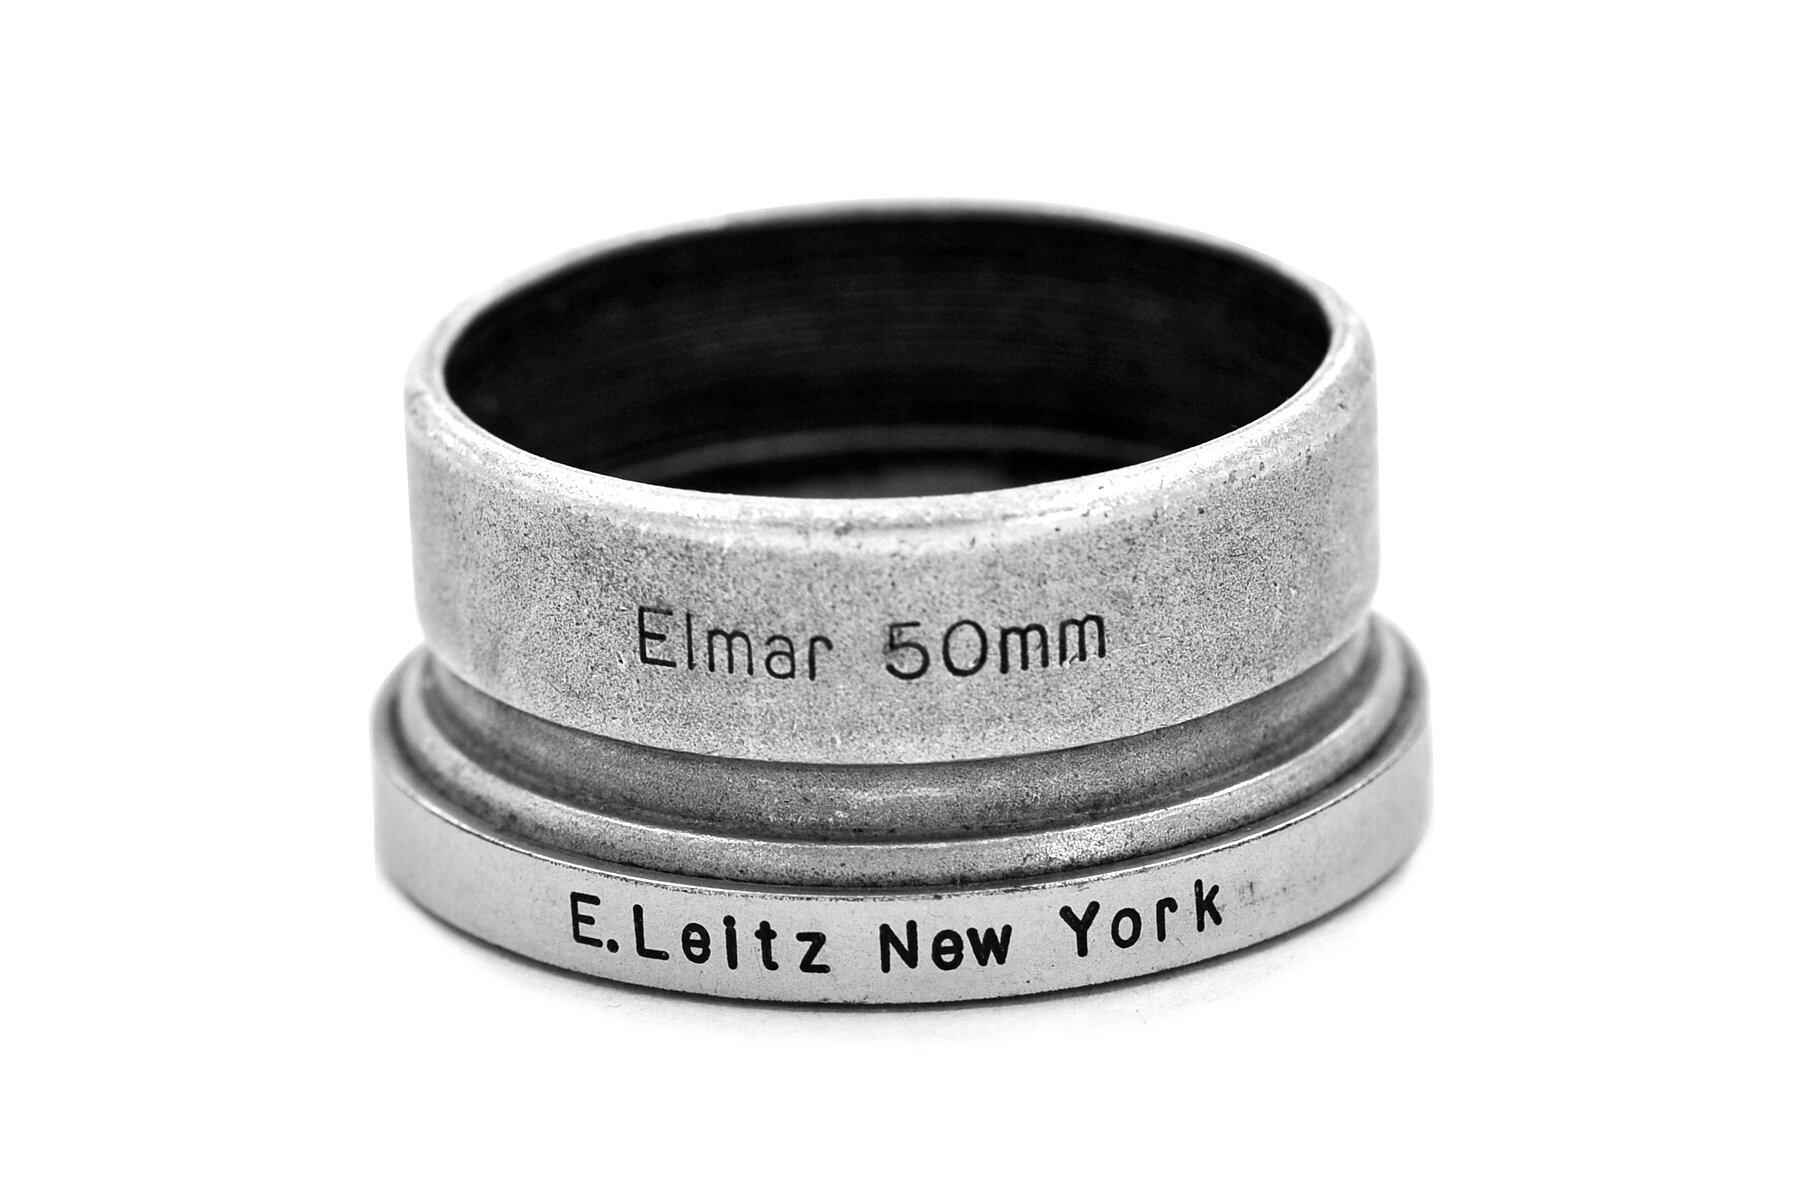 _DSC3146 4x6 New York for 5cm  Elmar-Edit.jpg